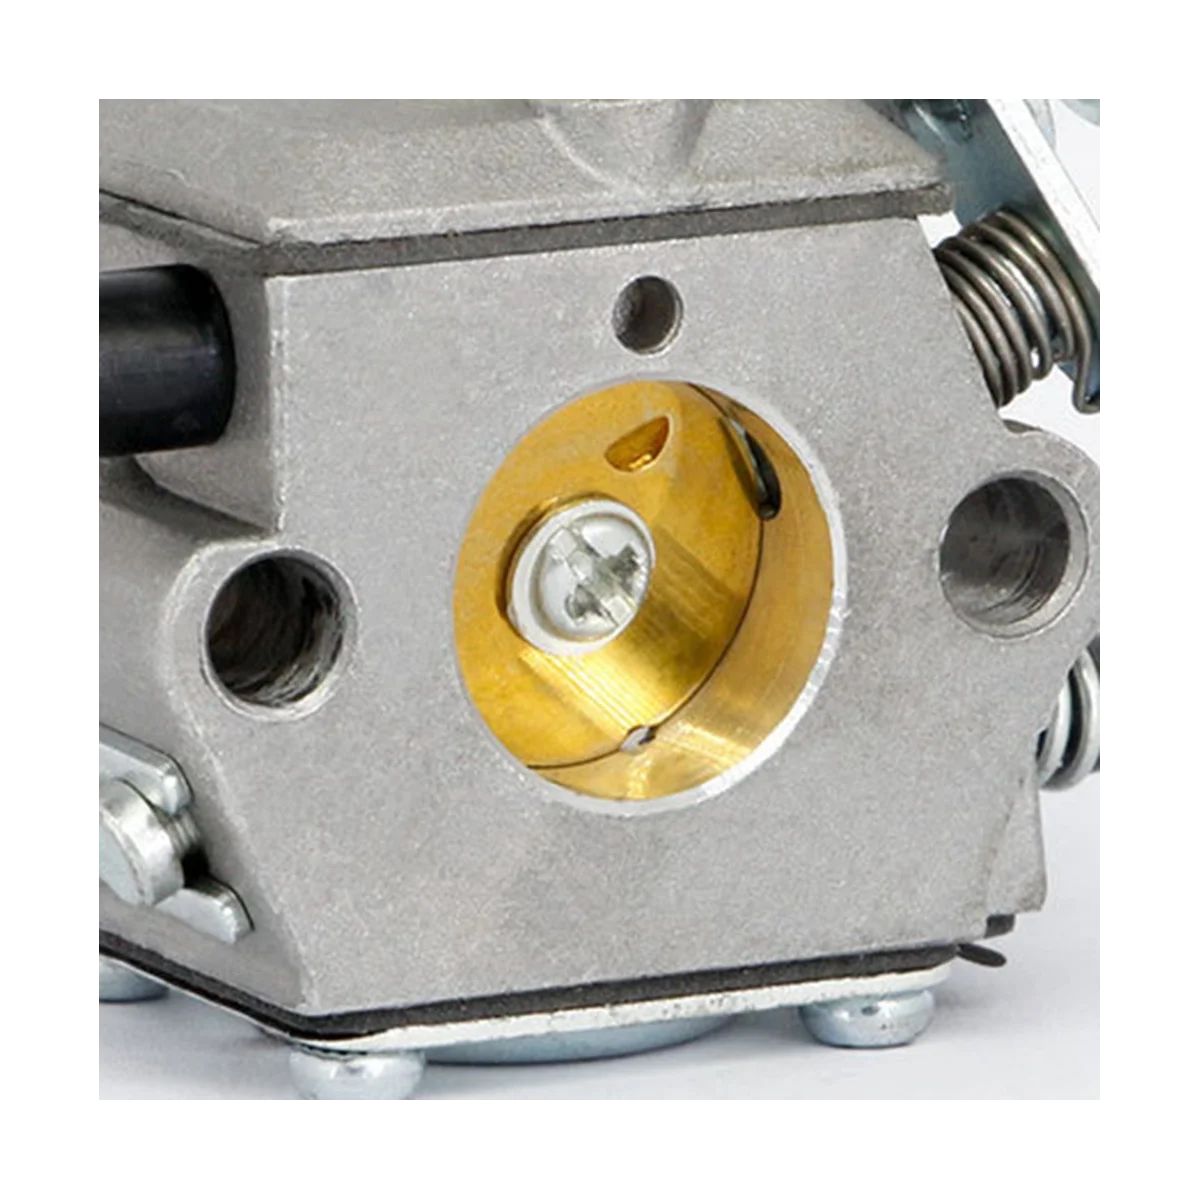 Pentru Stihl028 028AV Carburator Kit HU-40D Walbro WT-16B Garnitura Filtru